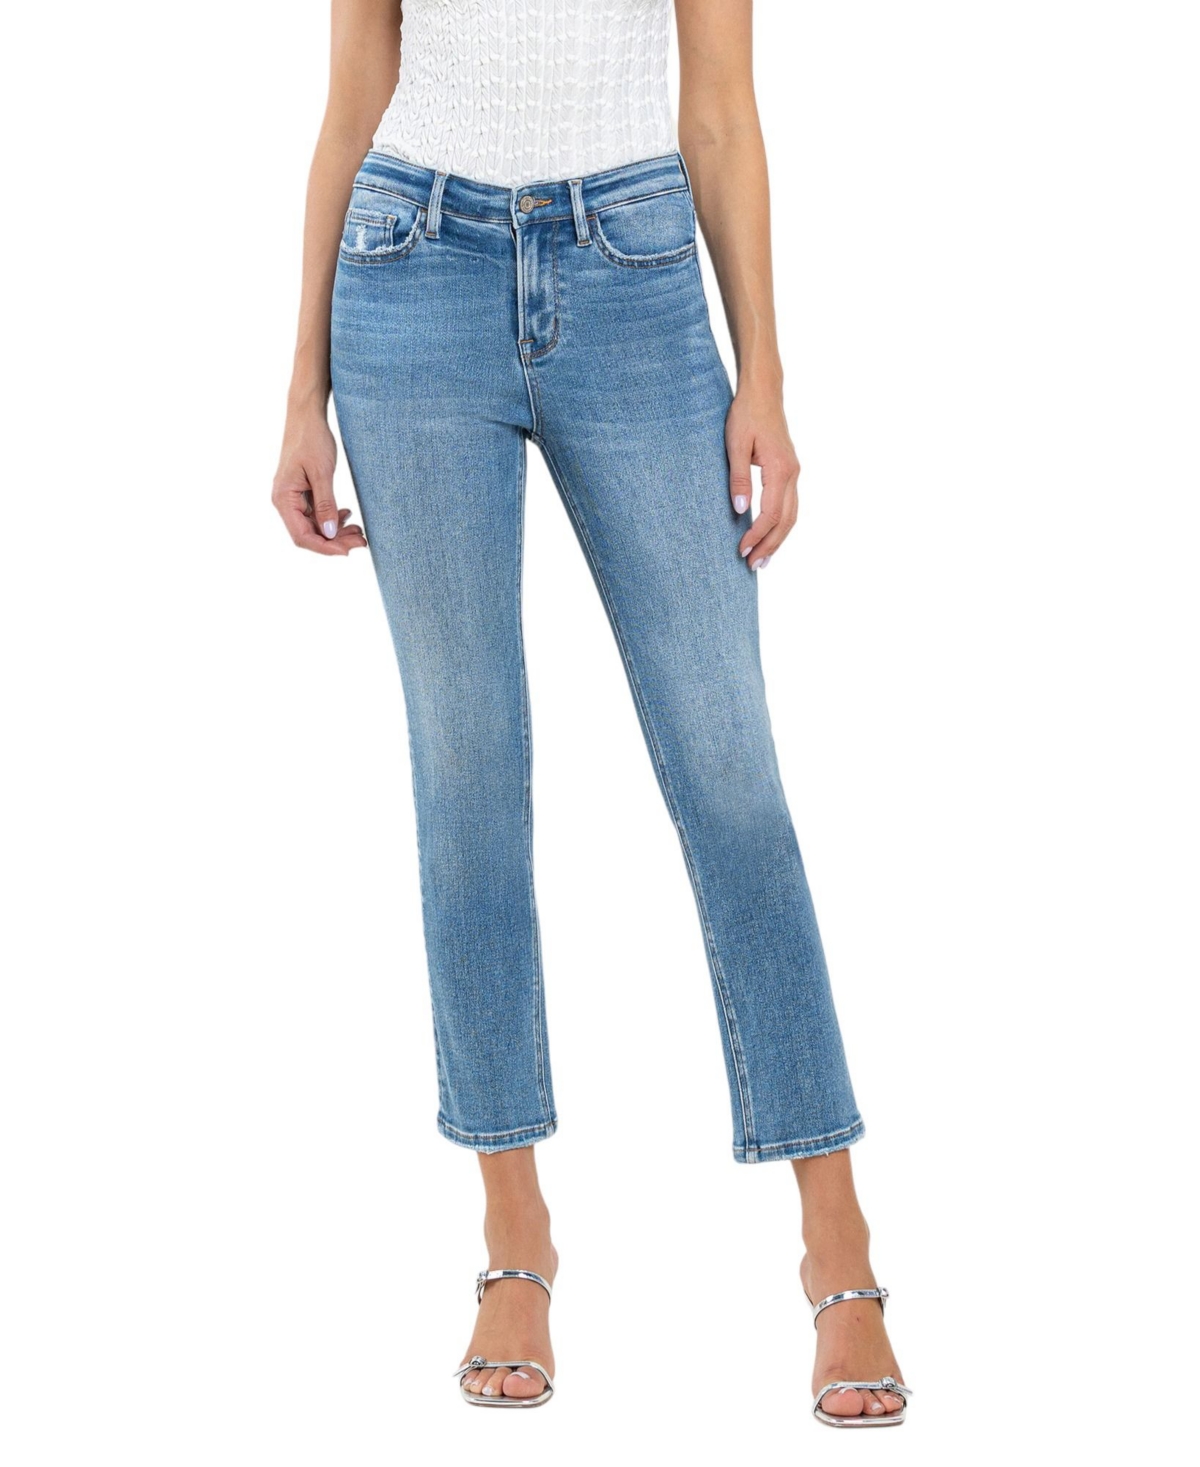 Women's High Rise Slim Straight Jeans - Defeat blue